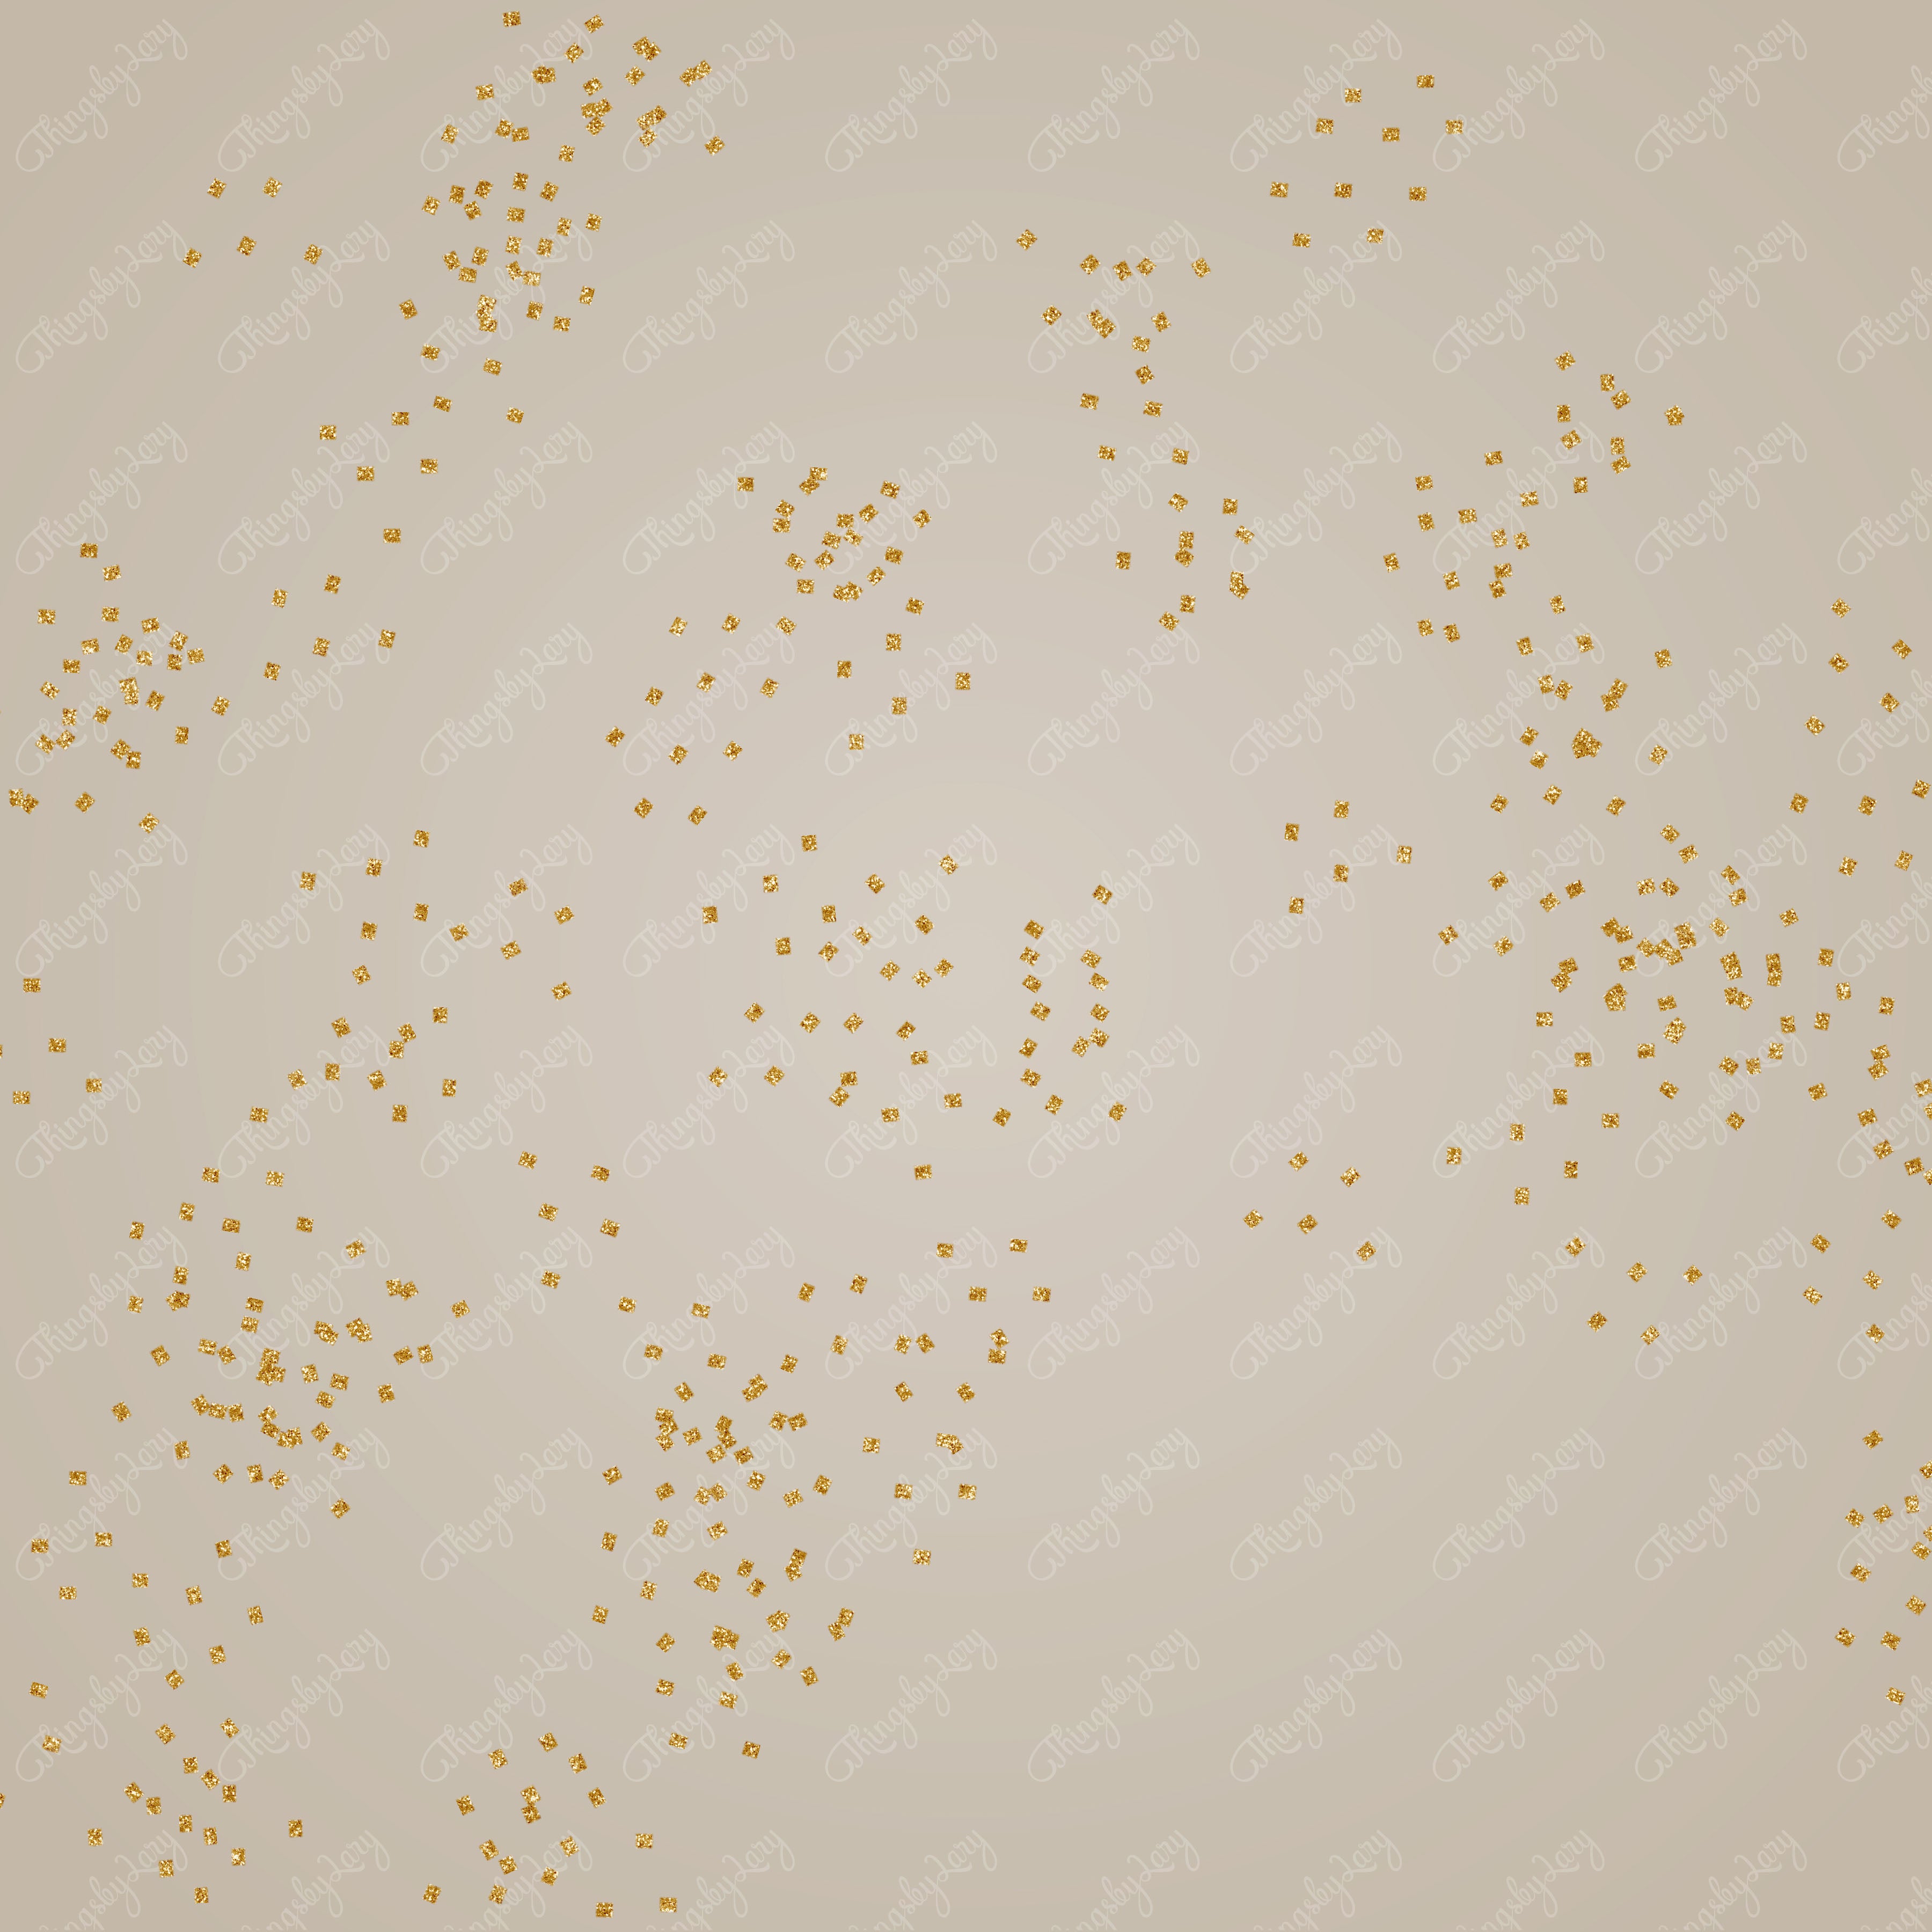 70 Vintage Gold Glitter Particles Set PNG Overlay Images